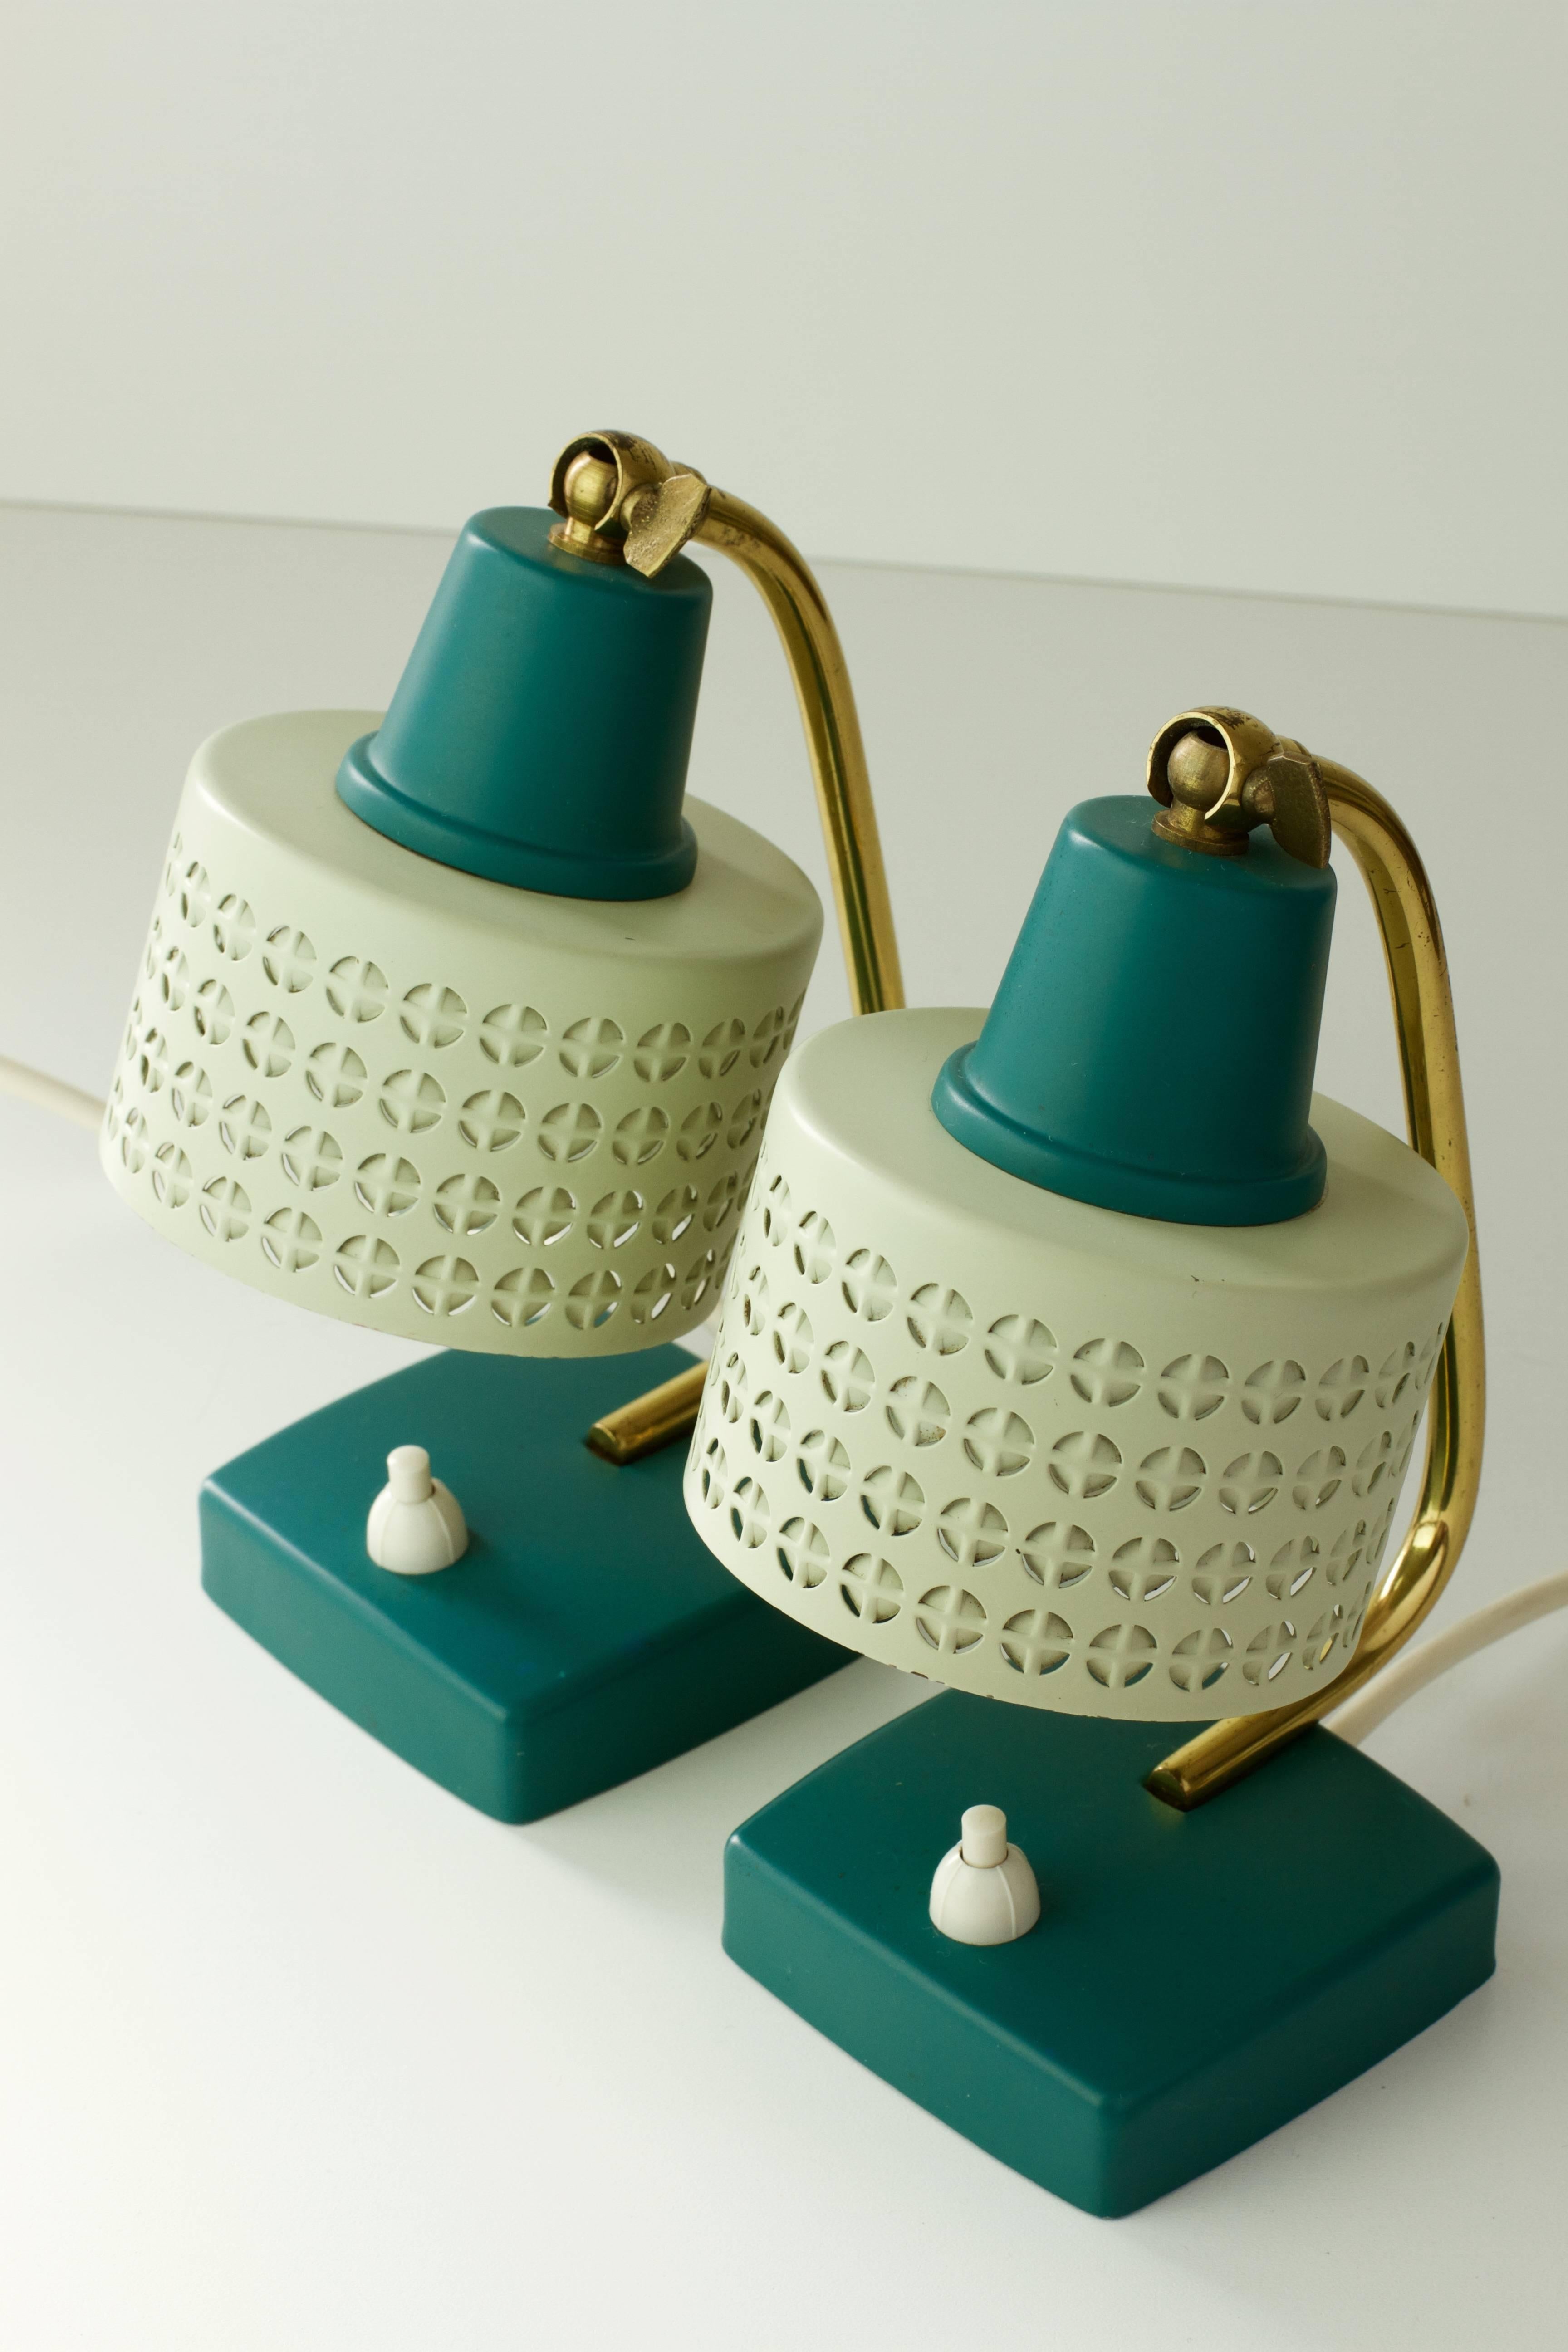 Mathieu Matégot Style Pair of 1950s Perforated Metal Shade Table Lamps / Lights 2